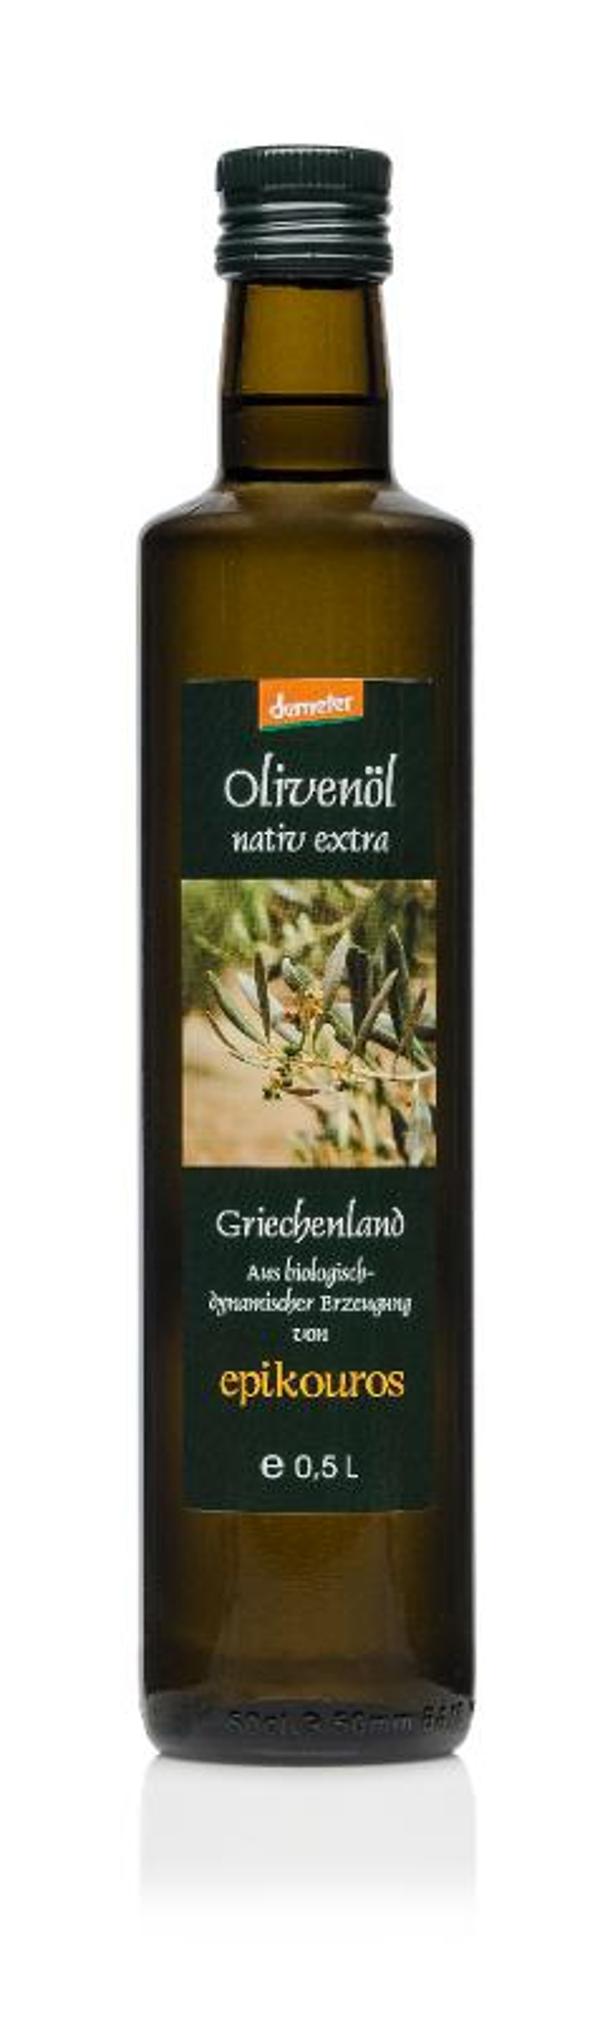 Produktfoto zu Olivenöl nativ extra Demeter